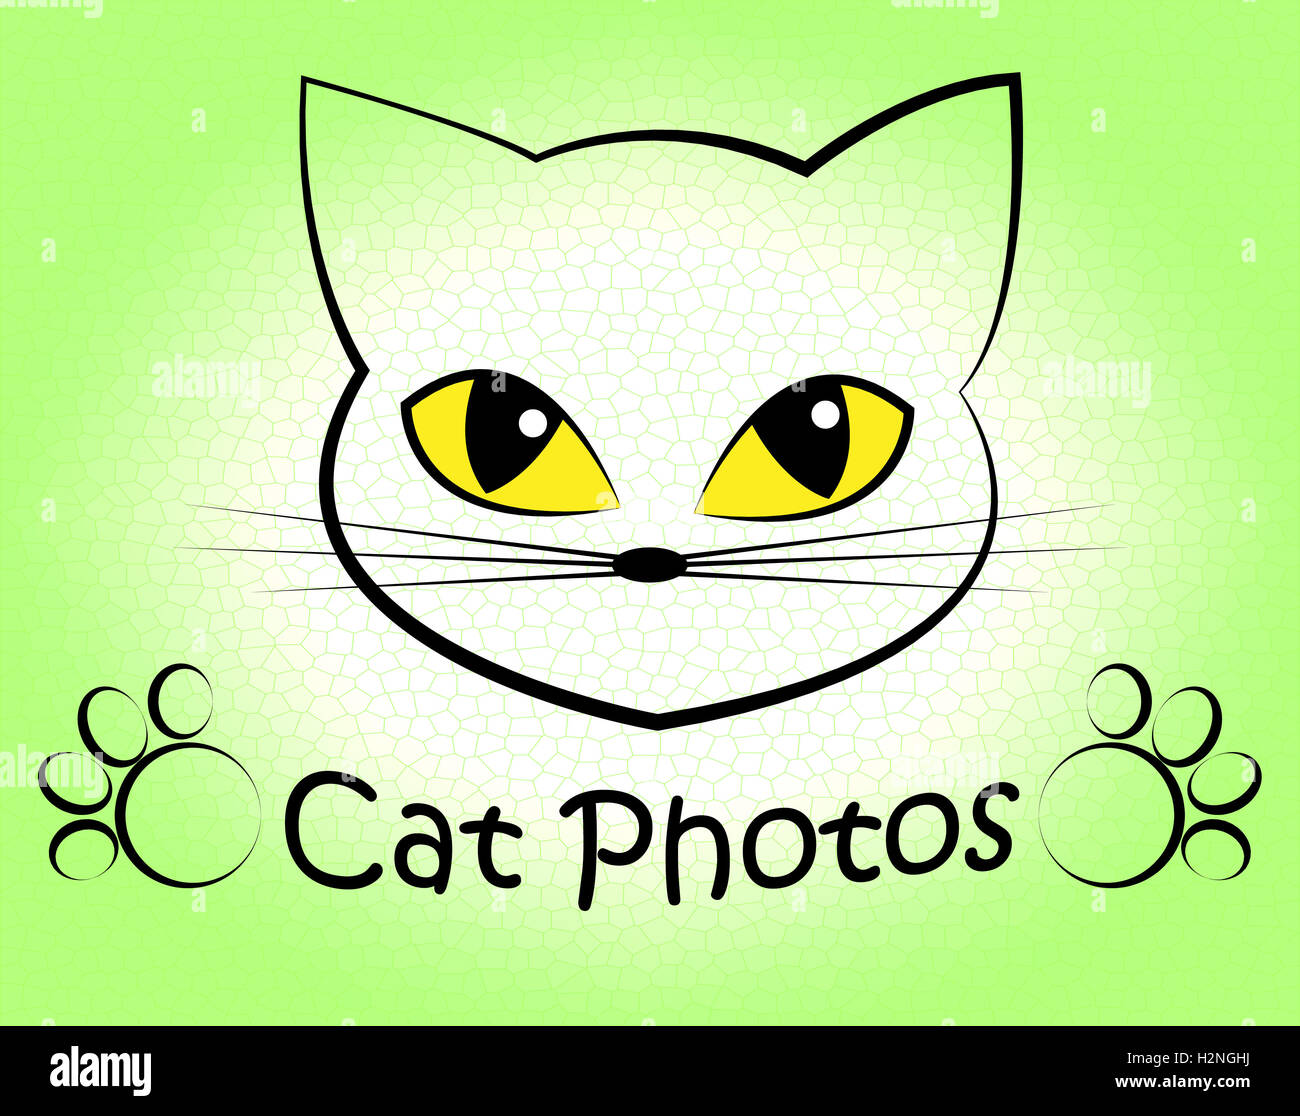 Cat Photos Indicating Feline Snapshot And Pets Stock Photo